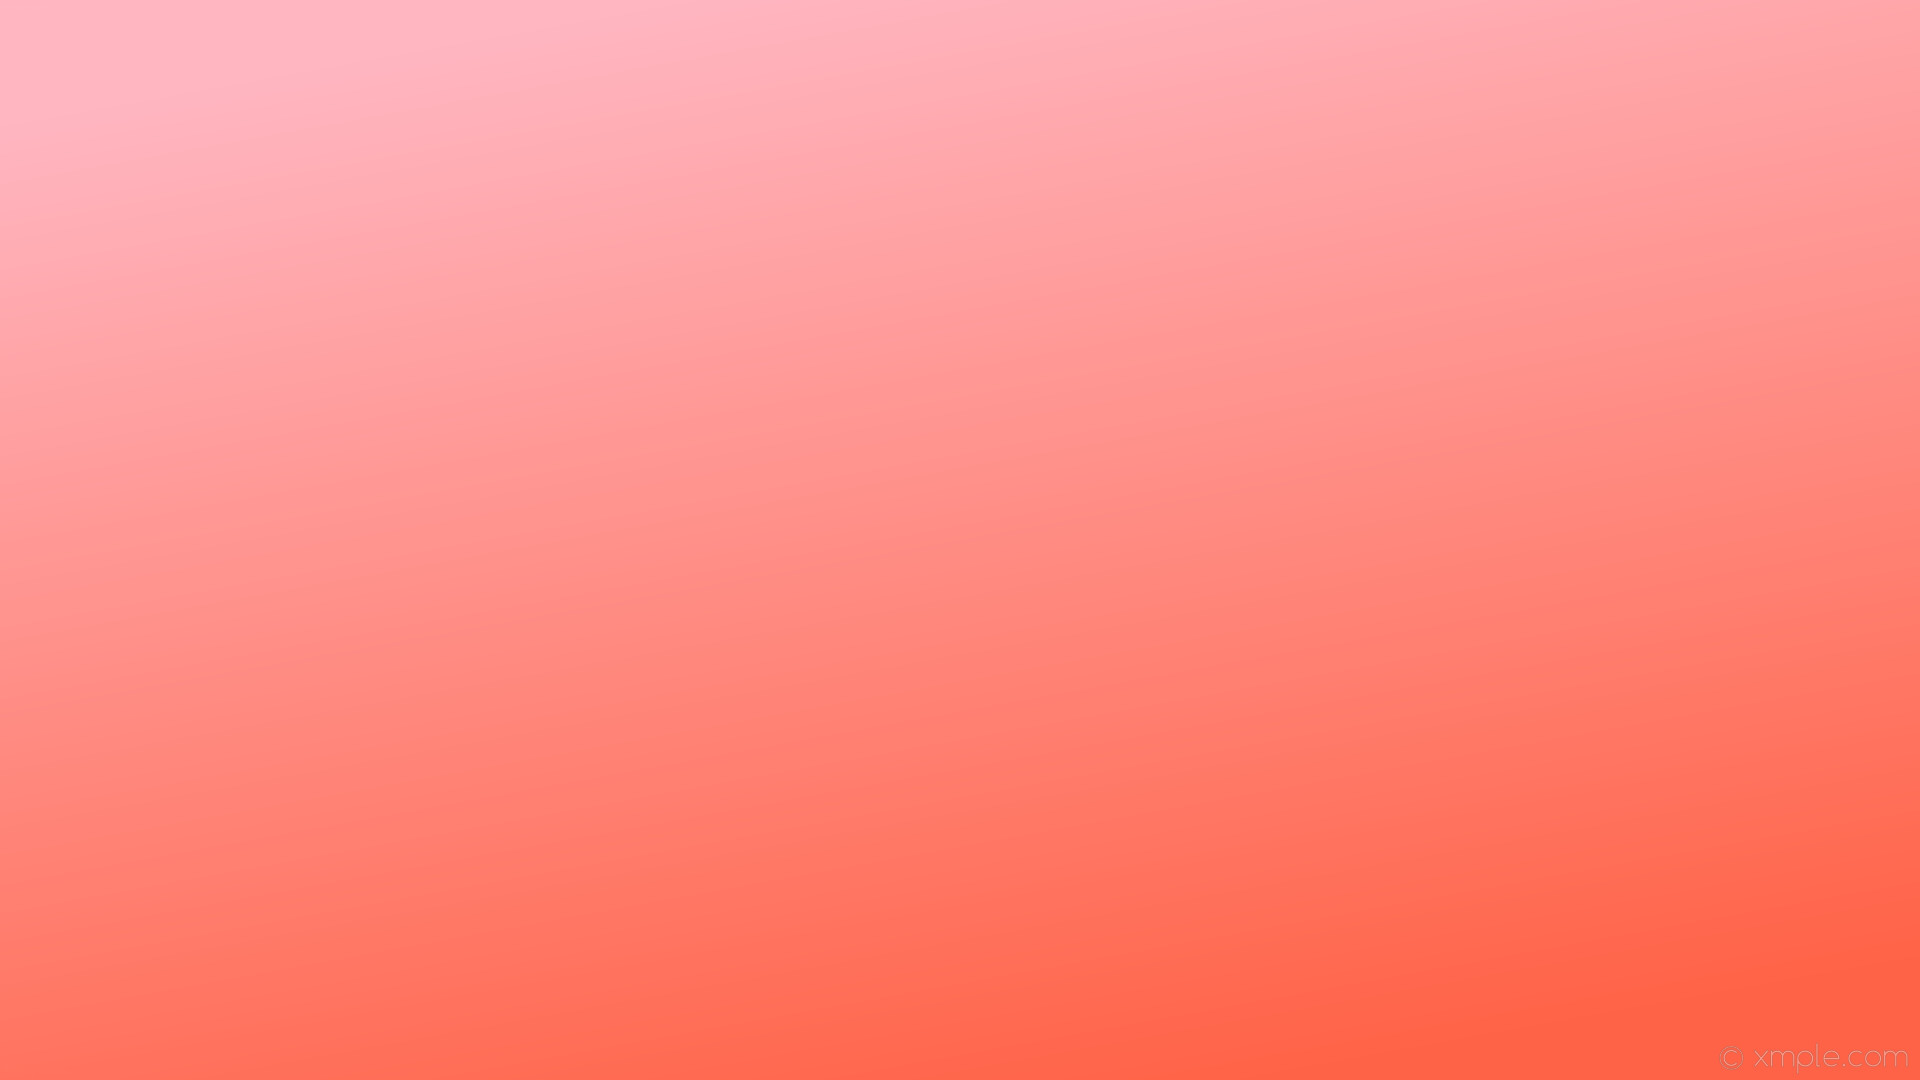 1920x1080 wallpaper pink orange gradient linear tomato light pink #ff6347 #ffb6c1 300Â°